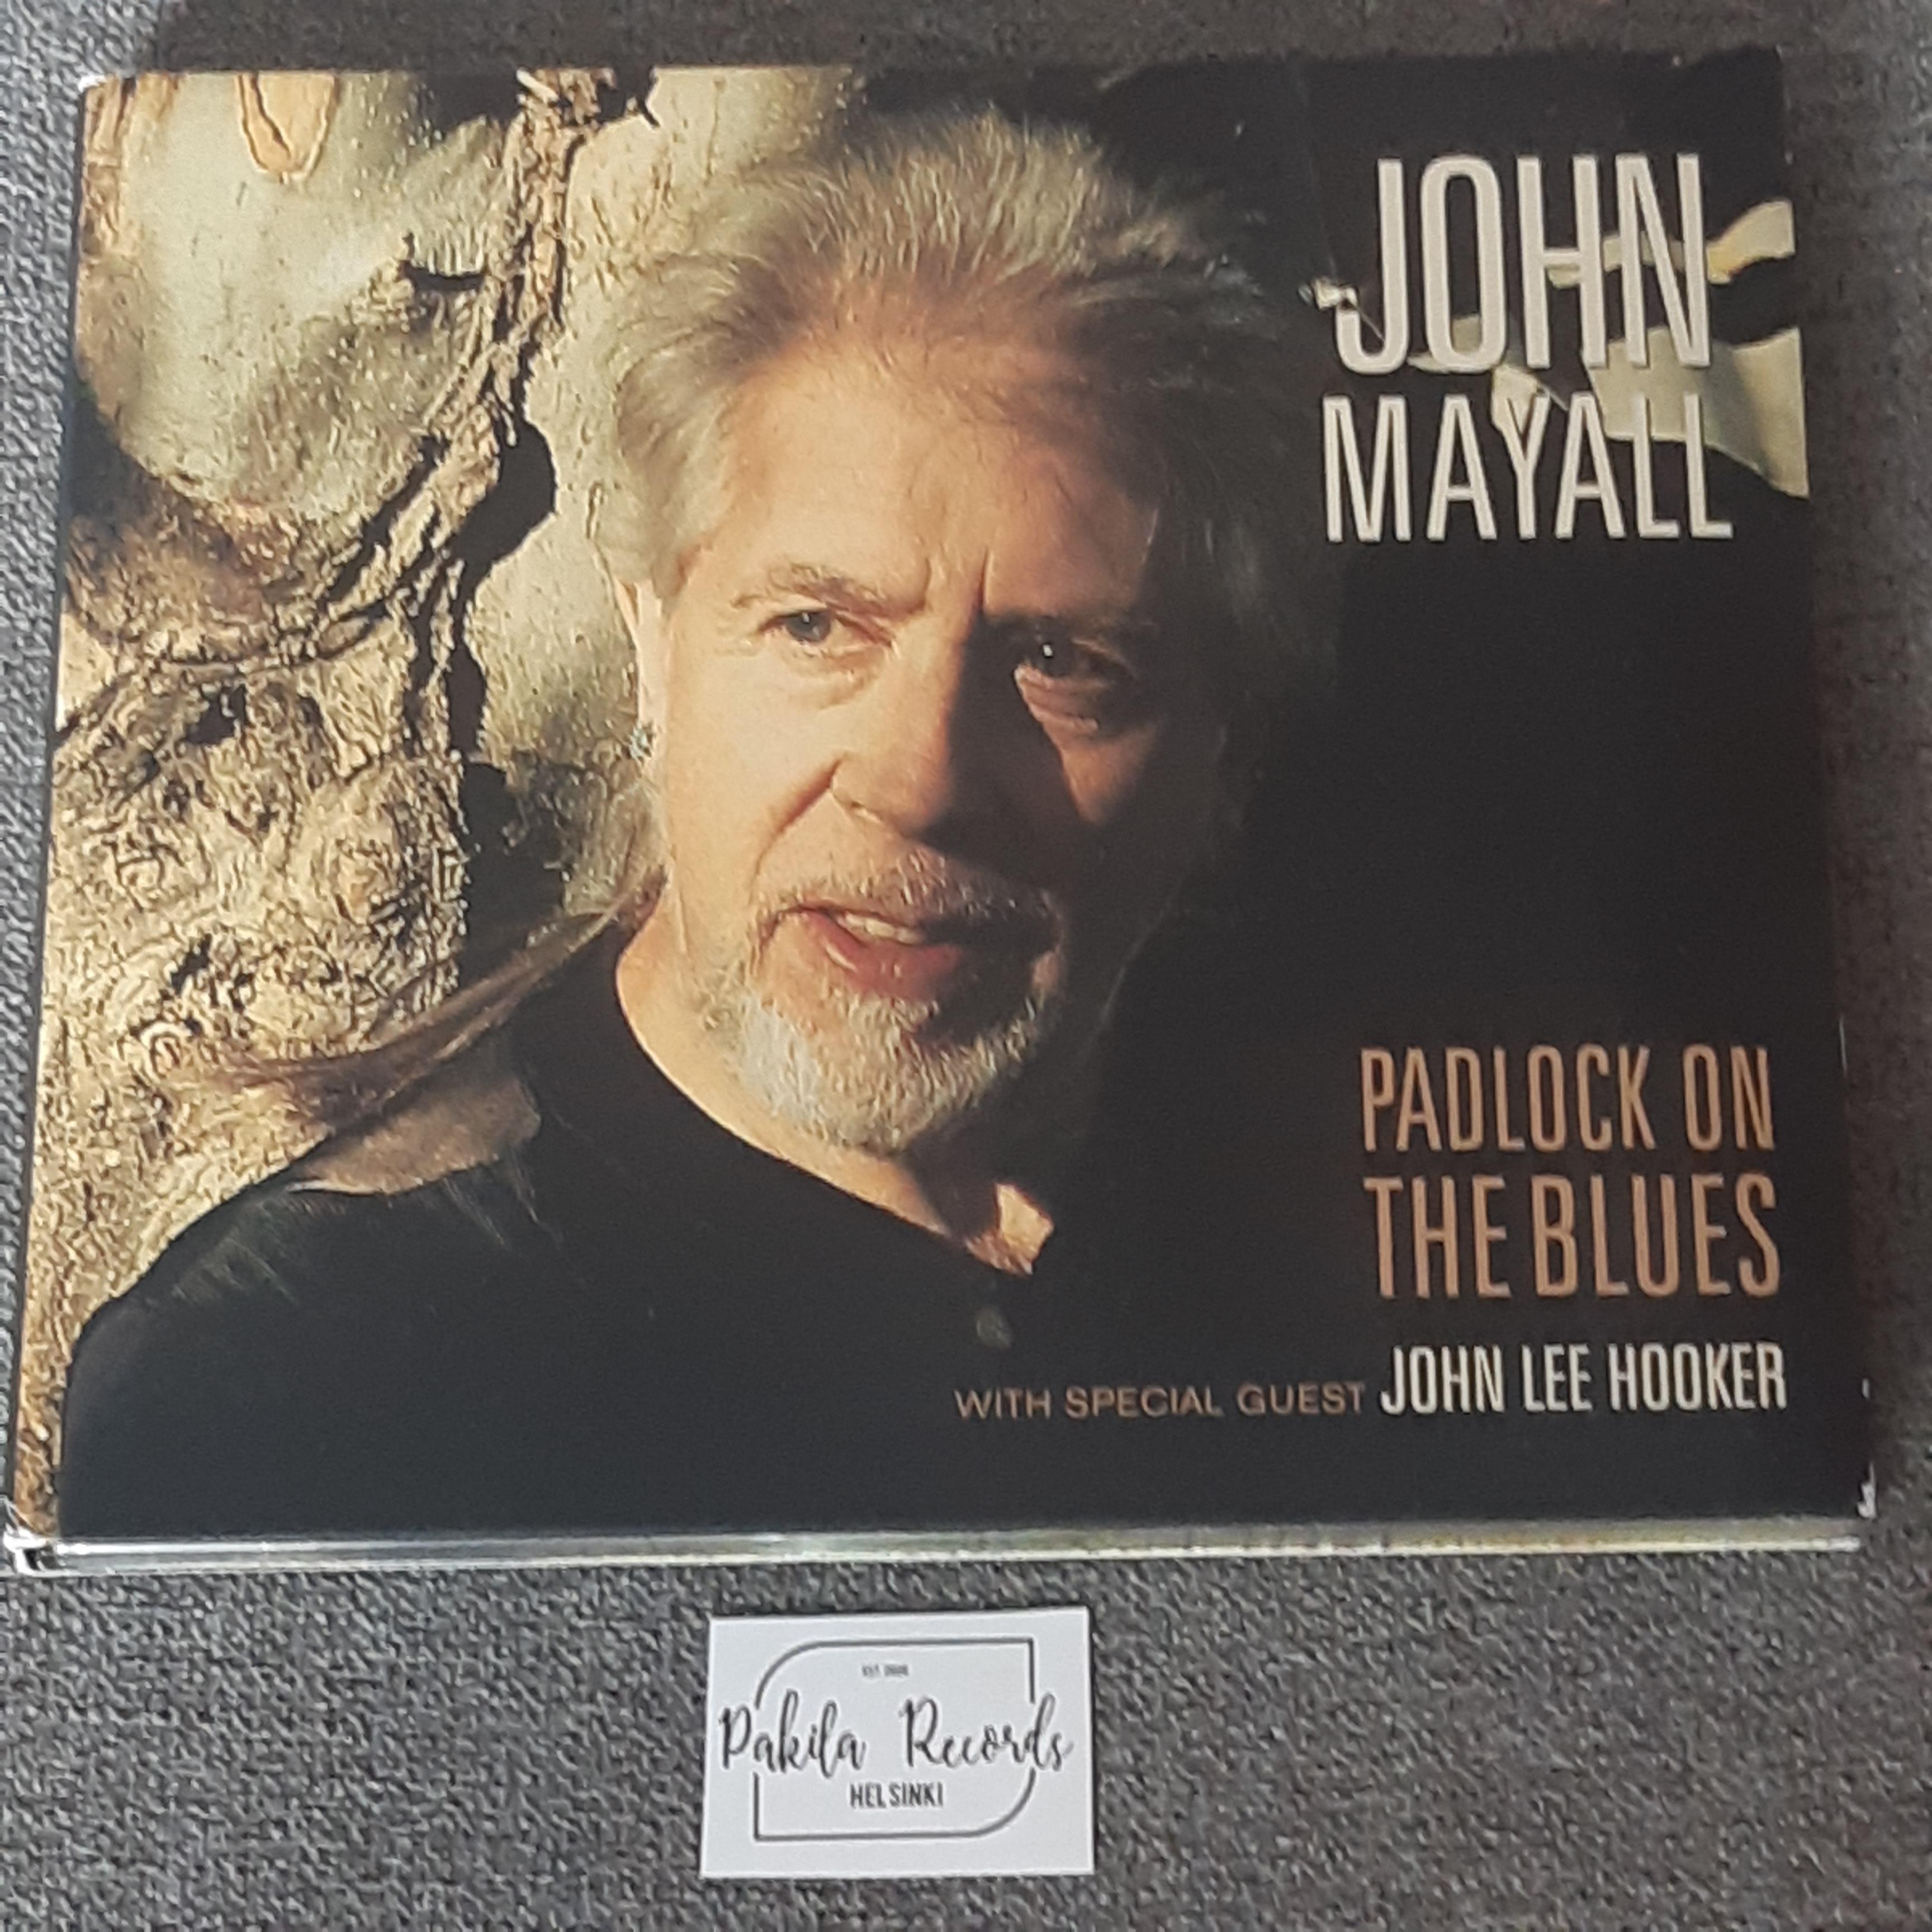 John Mayall & The Bluesbreakers - Padlock On The Blues - CD (käytetty)